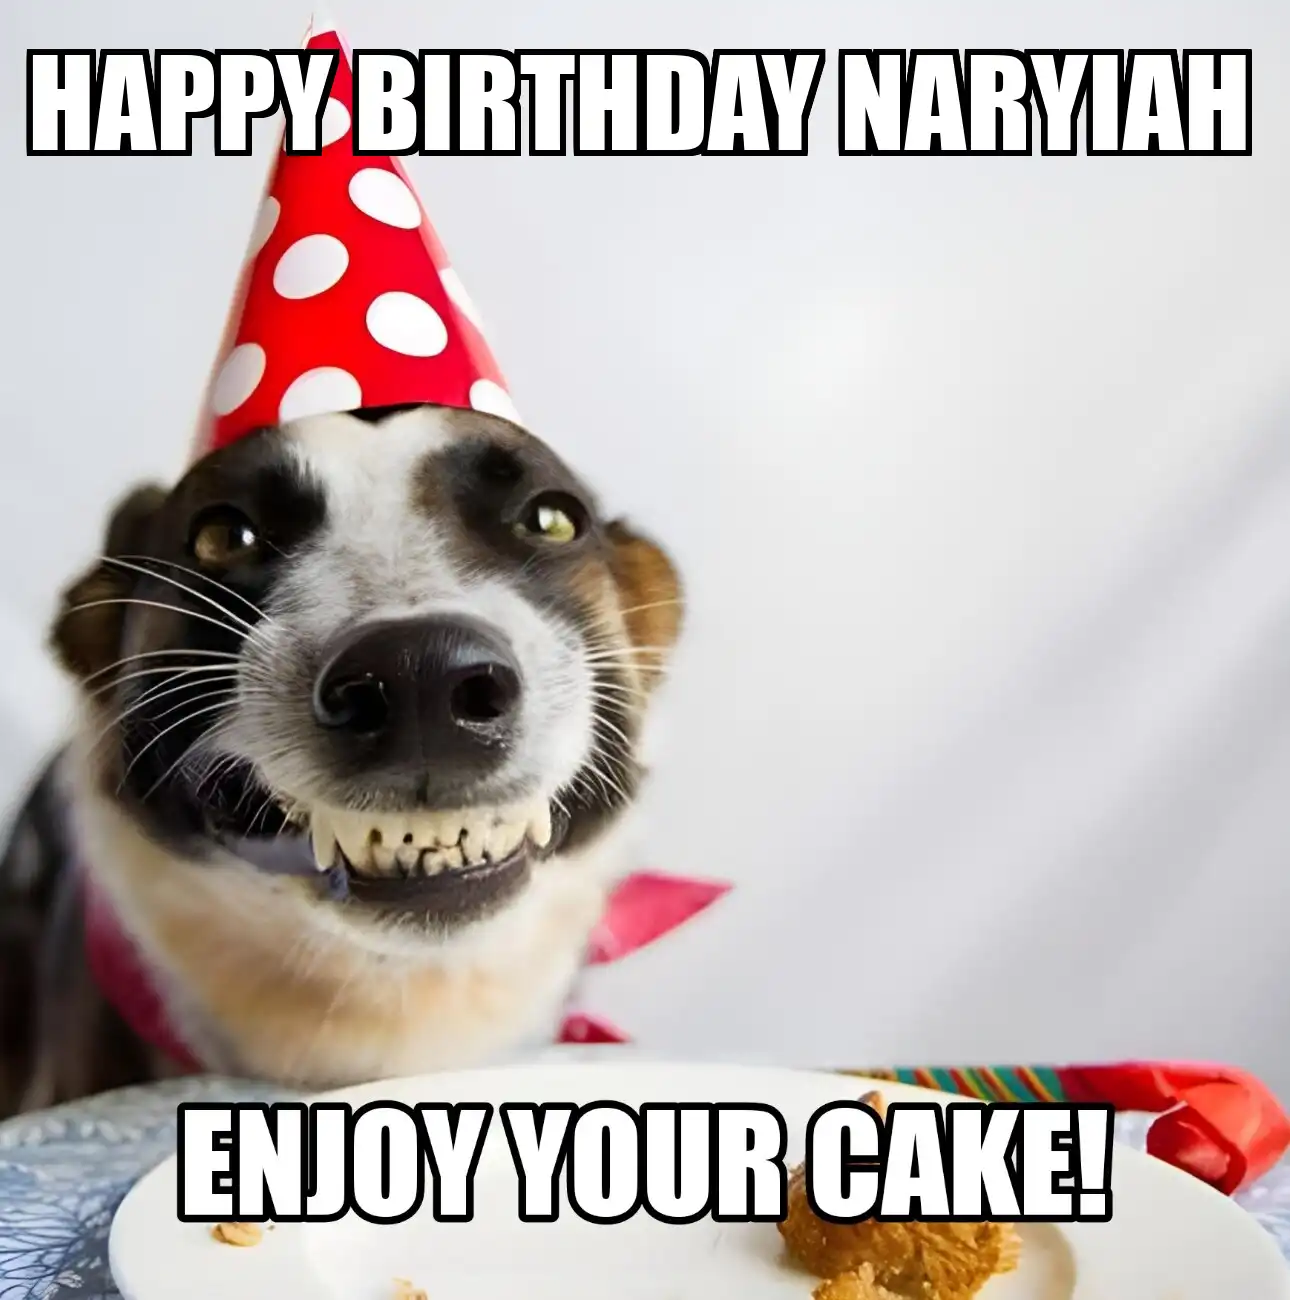 Happy Birthday Naryiah Enjoy Your Cake Dog Meme